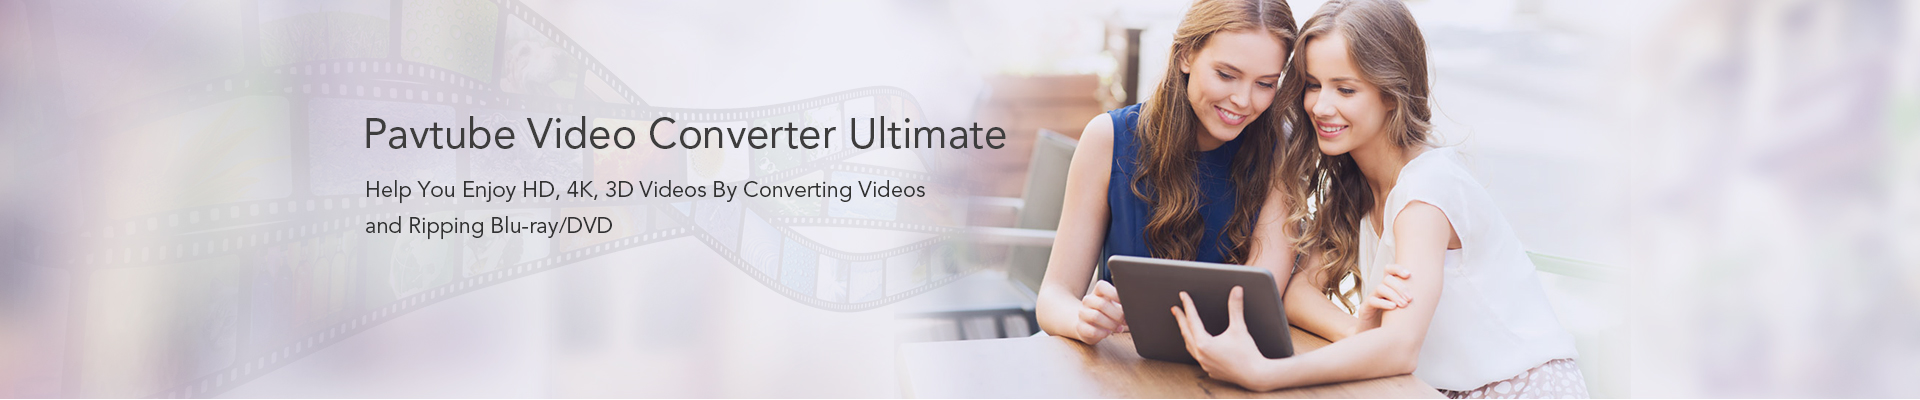 pavtube-video-converter-ultimate